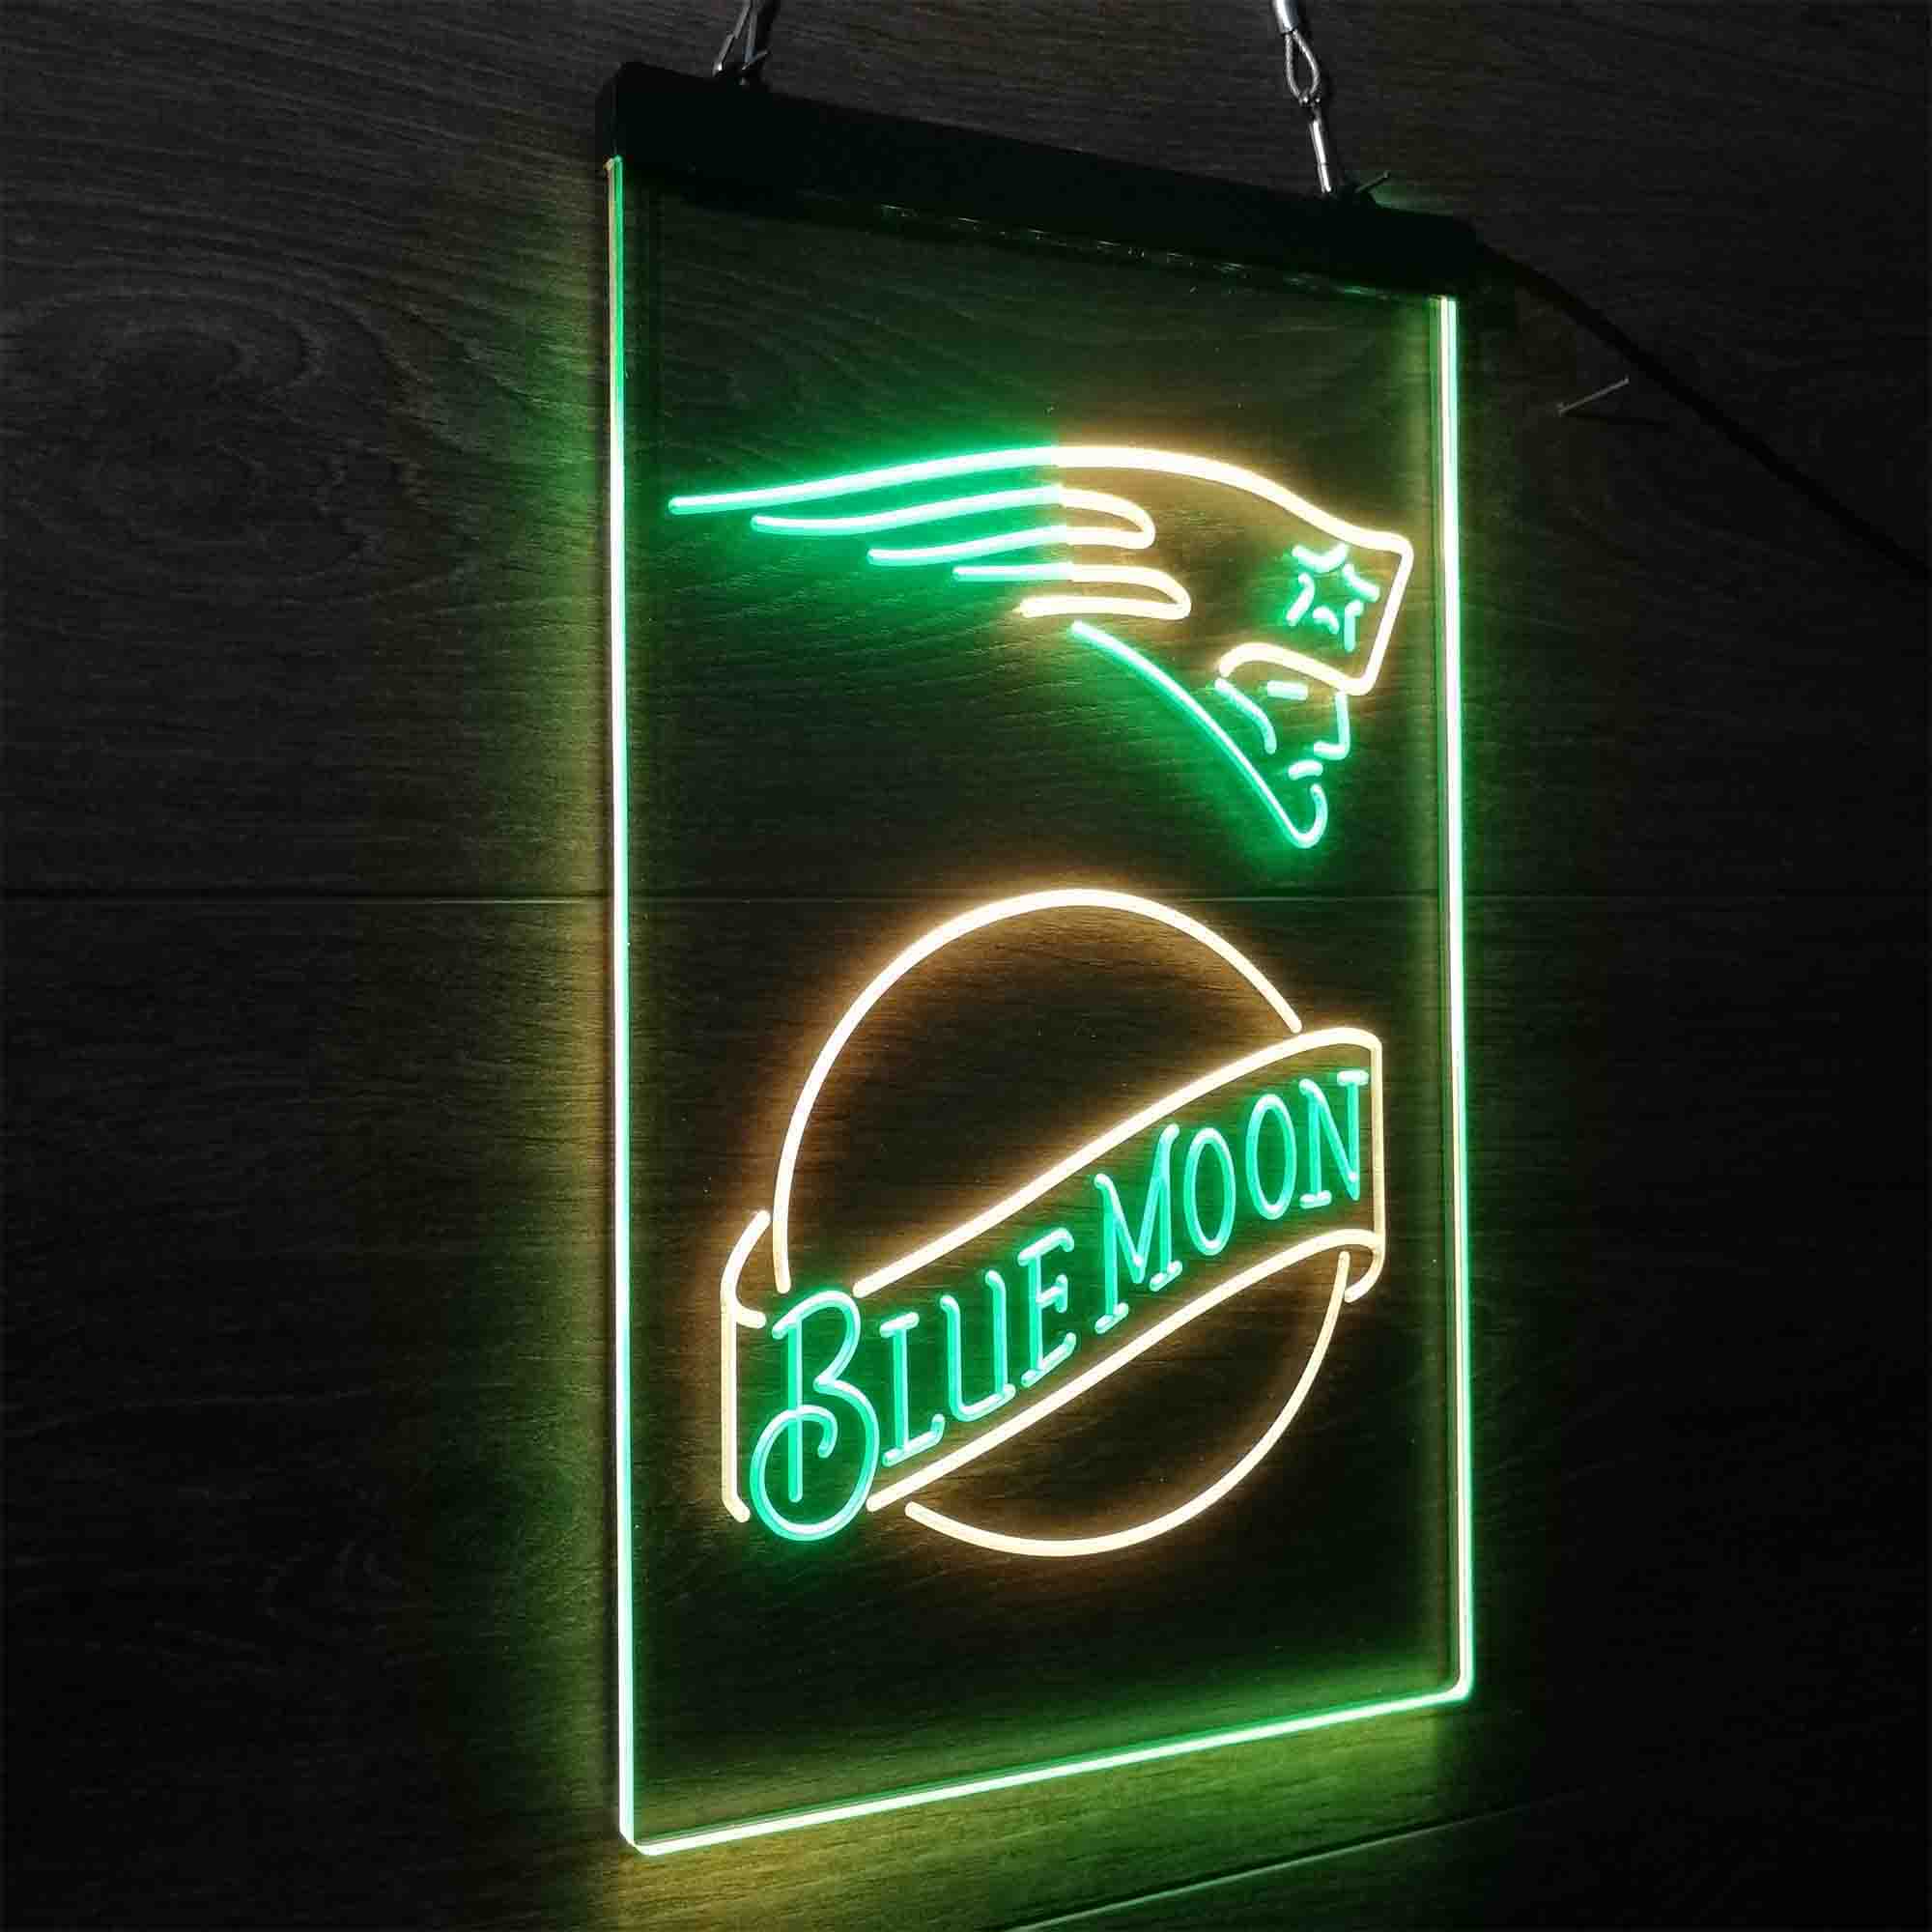 Blue Moon Bar New England Patriots Est. 1960 LED Neon Sign